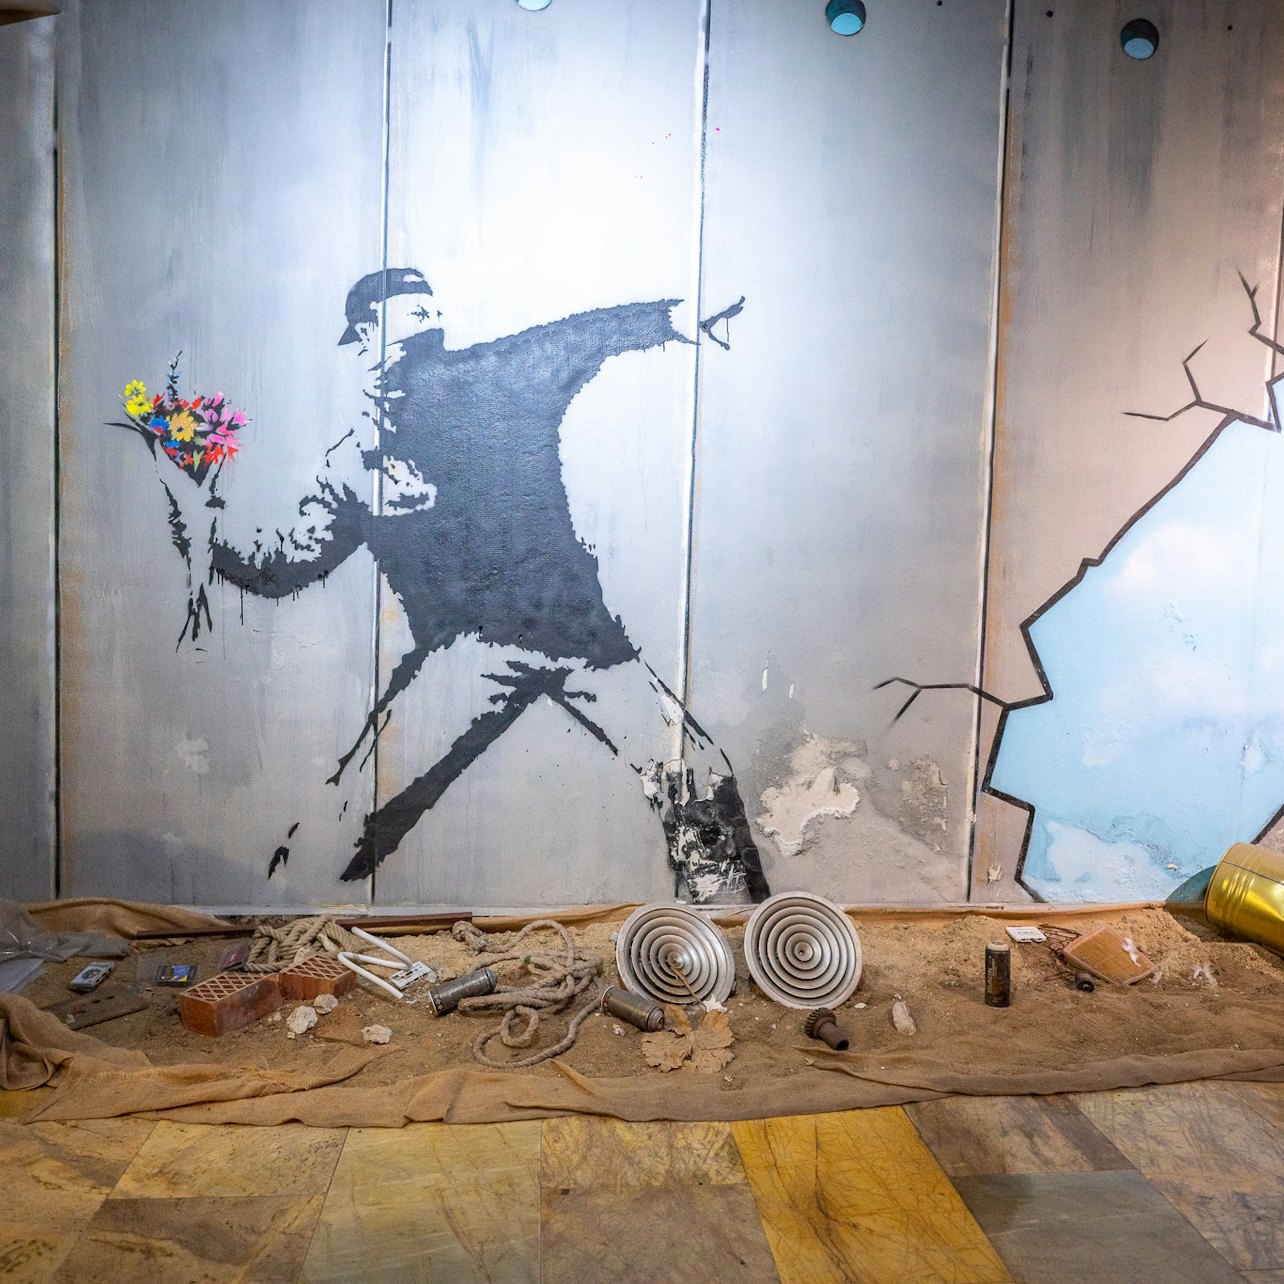 Banksy Museum Barcelona - Accommodations in Barcelona